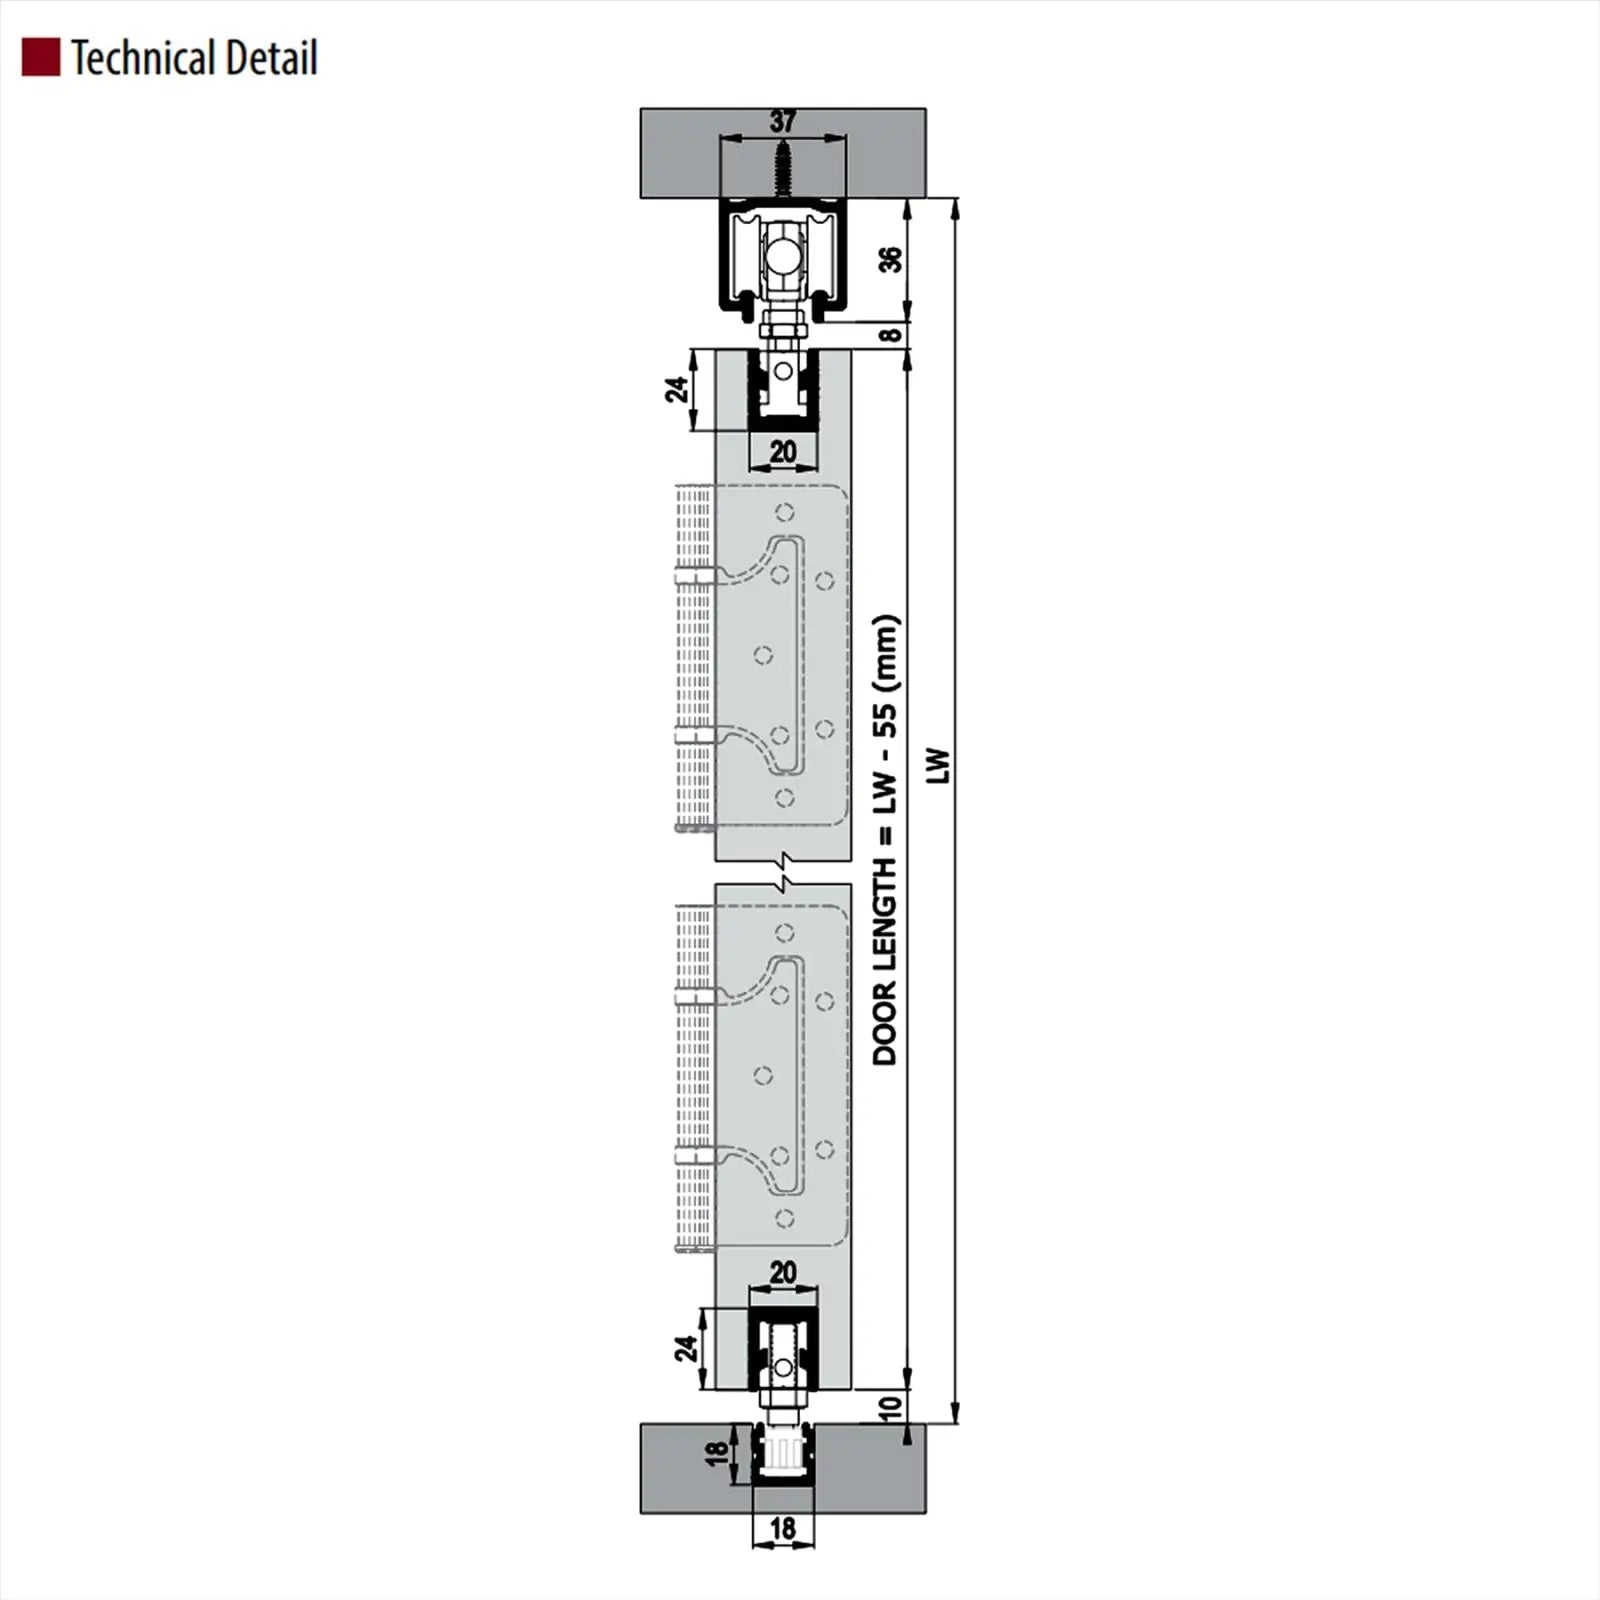 F-Slide Folding Sliding Door Kit - 5 + 1 Door - 4800mm Track - Decor And Decor